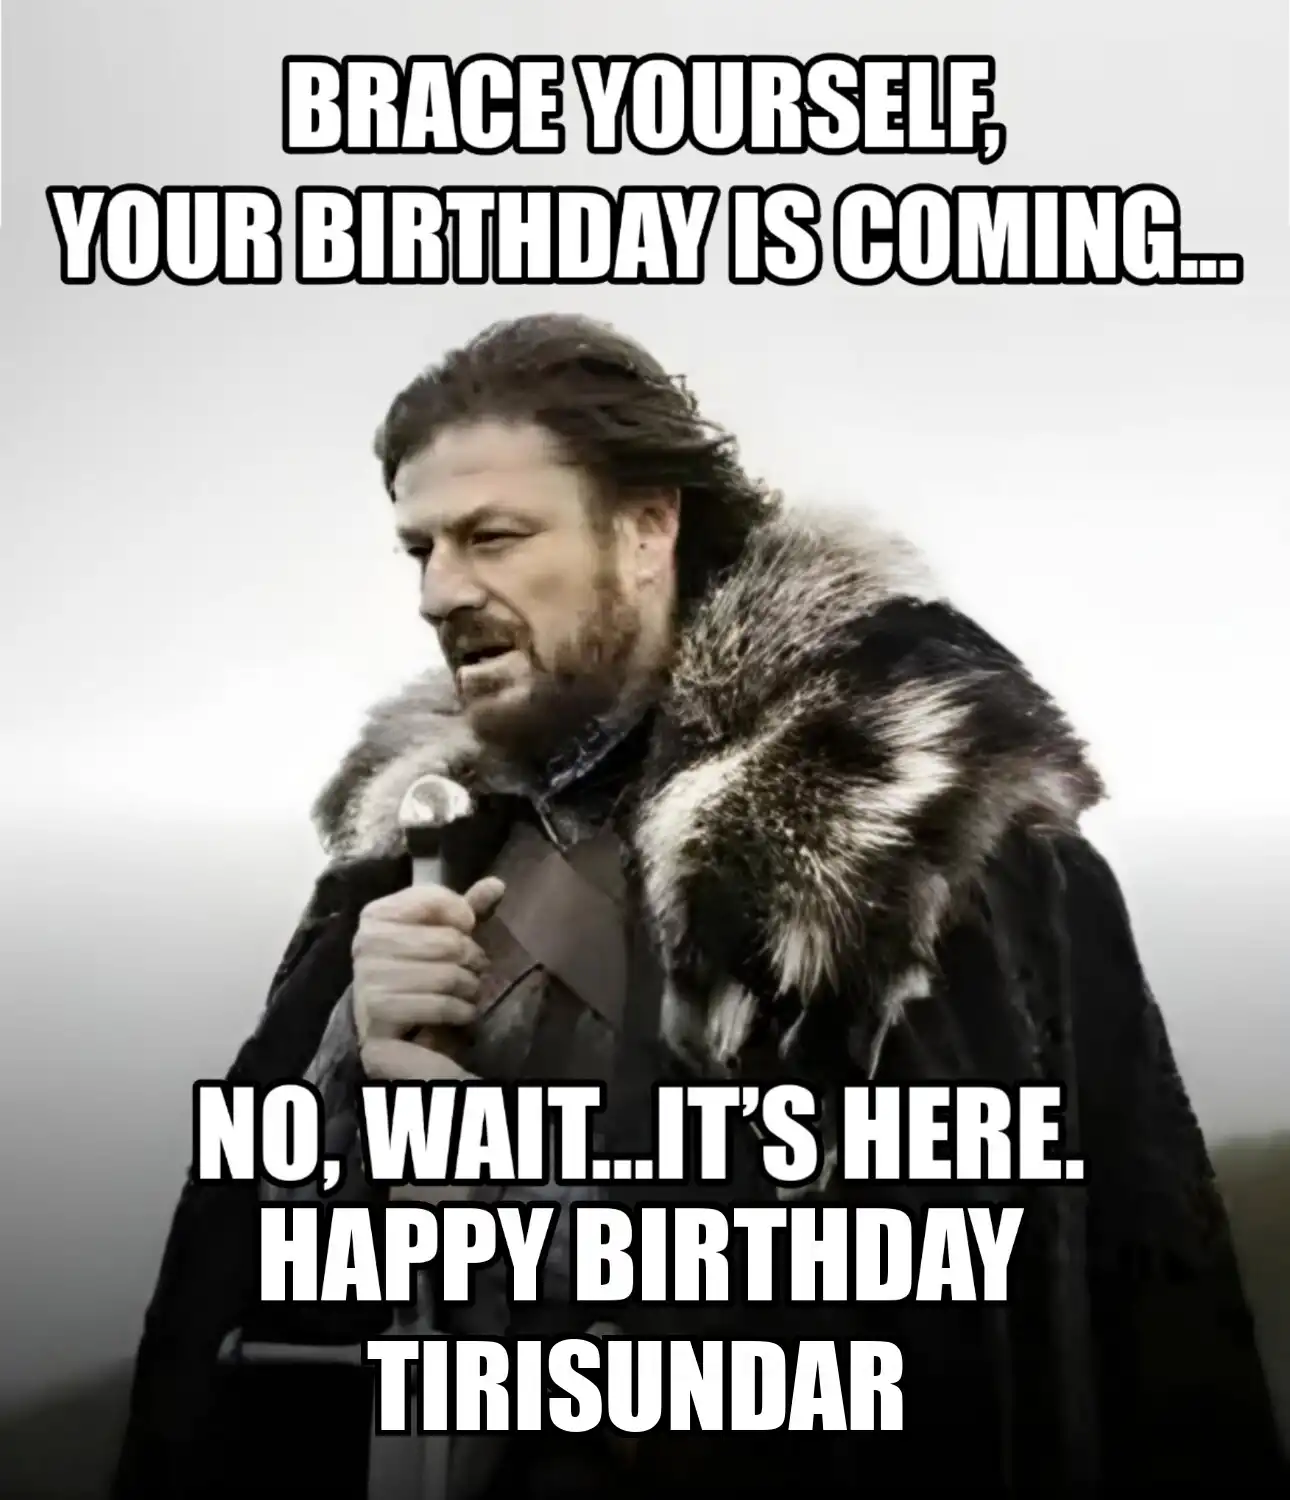 Happy Birthday Tirisundar Brace Yourself Your Birthday Is Coming Meme